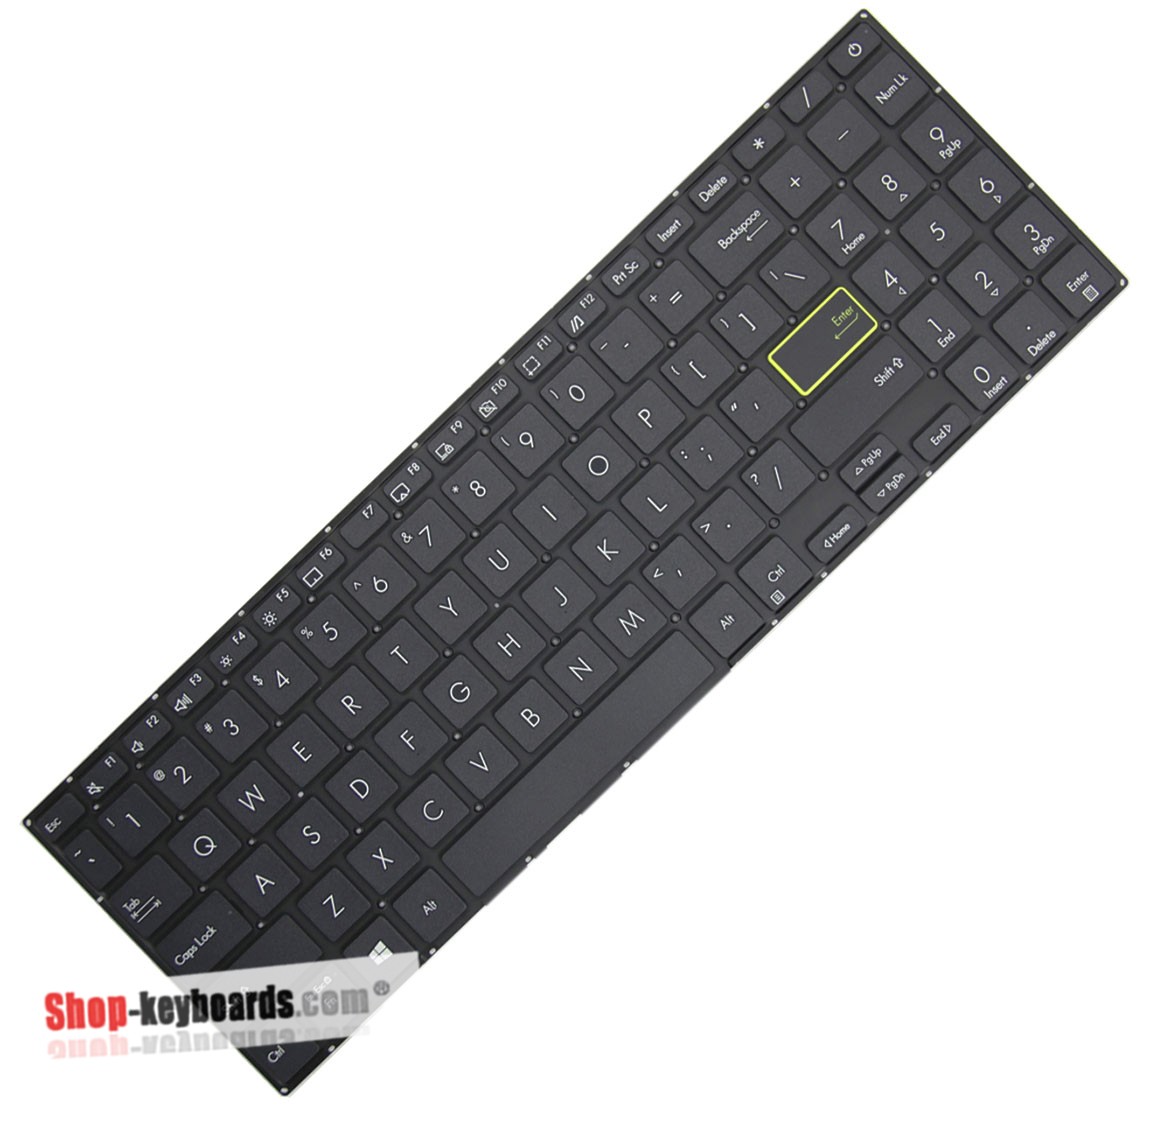 Asus 0KNB0-510GRU00  Keyboard replacement